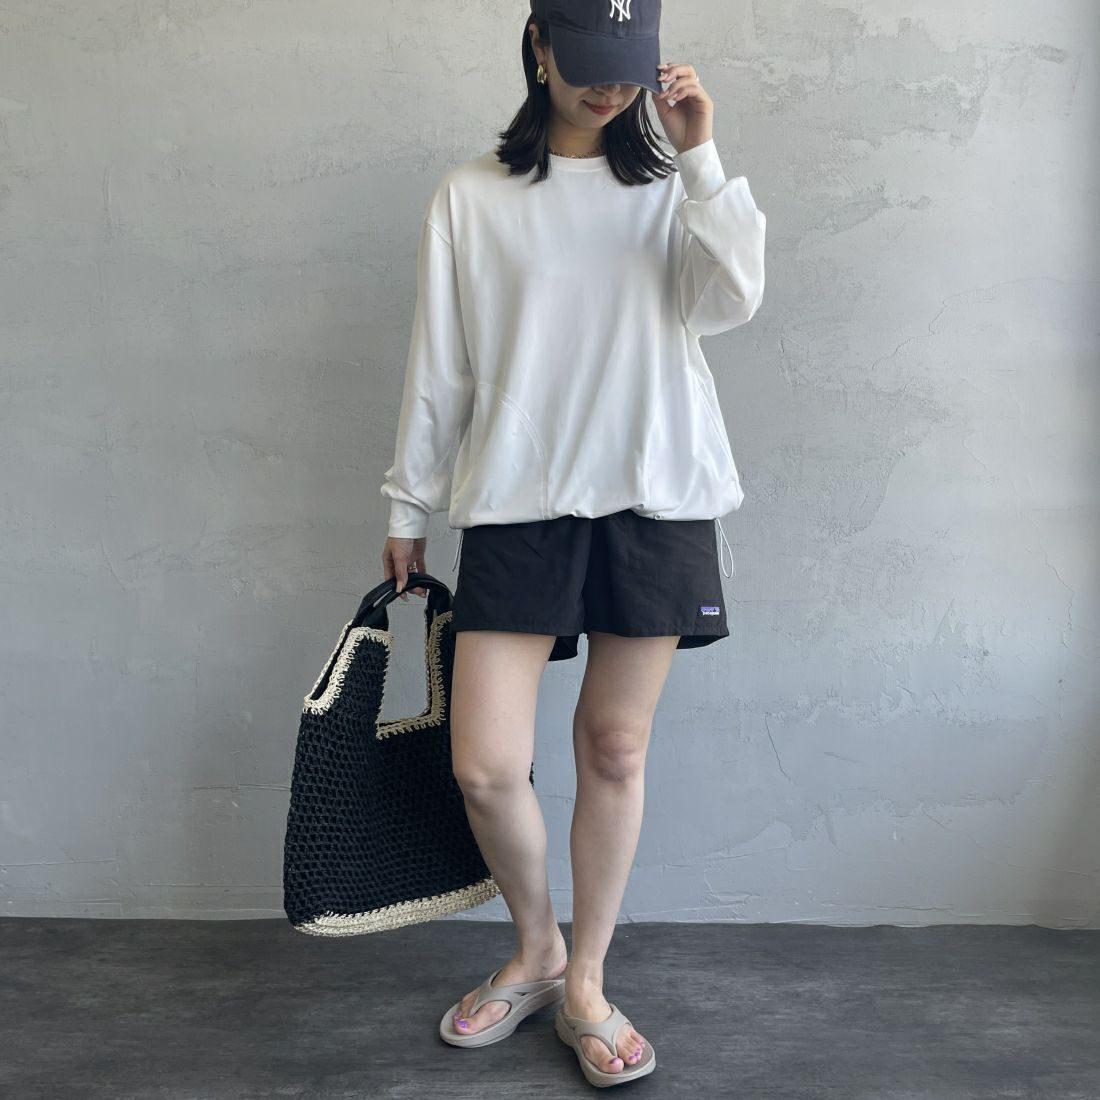 Jeans Factory Clothes [ジーンズファクトリークローズ] 裾ドローコードラッシュガードTシャツ [IN2-CST-4] WHITE